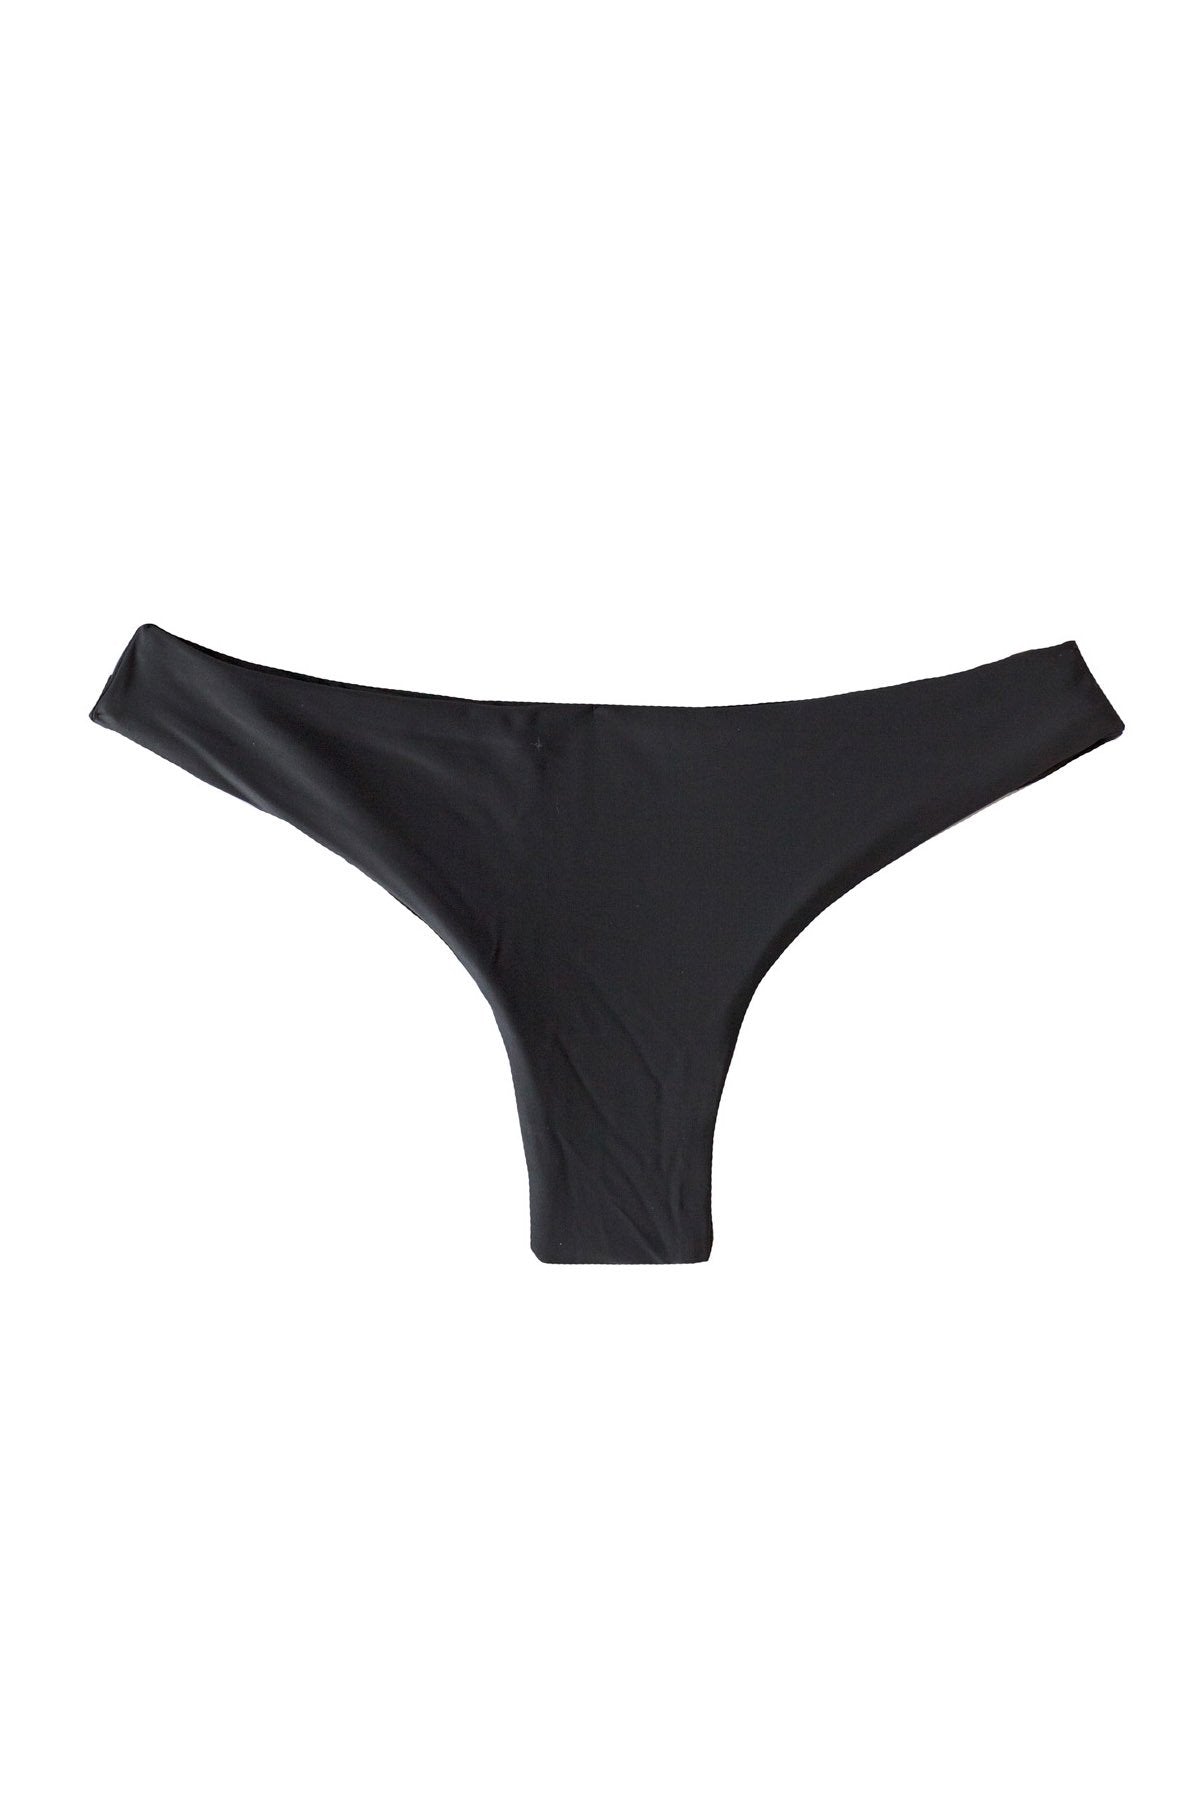 Ruched Black Cheeky Bikini Swimsuit BOTTOMS Scrunchy Detail Seamless